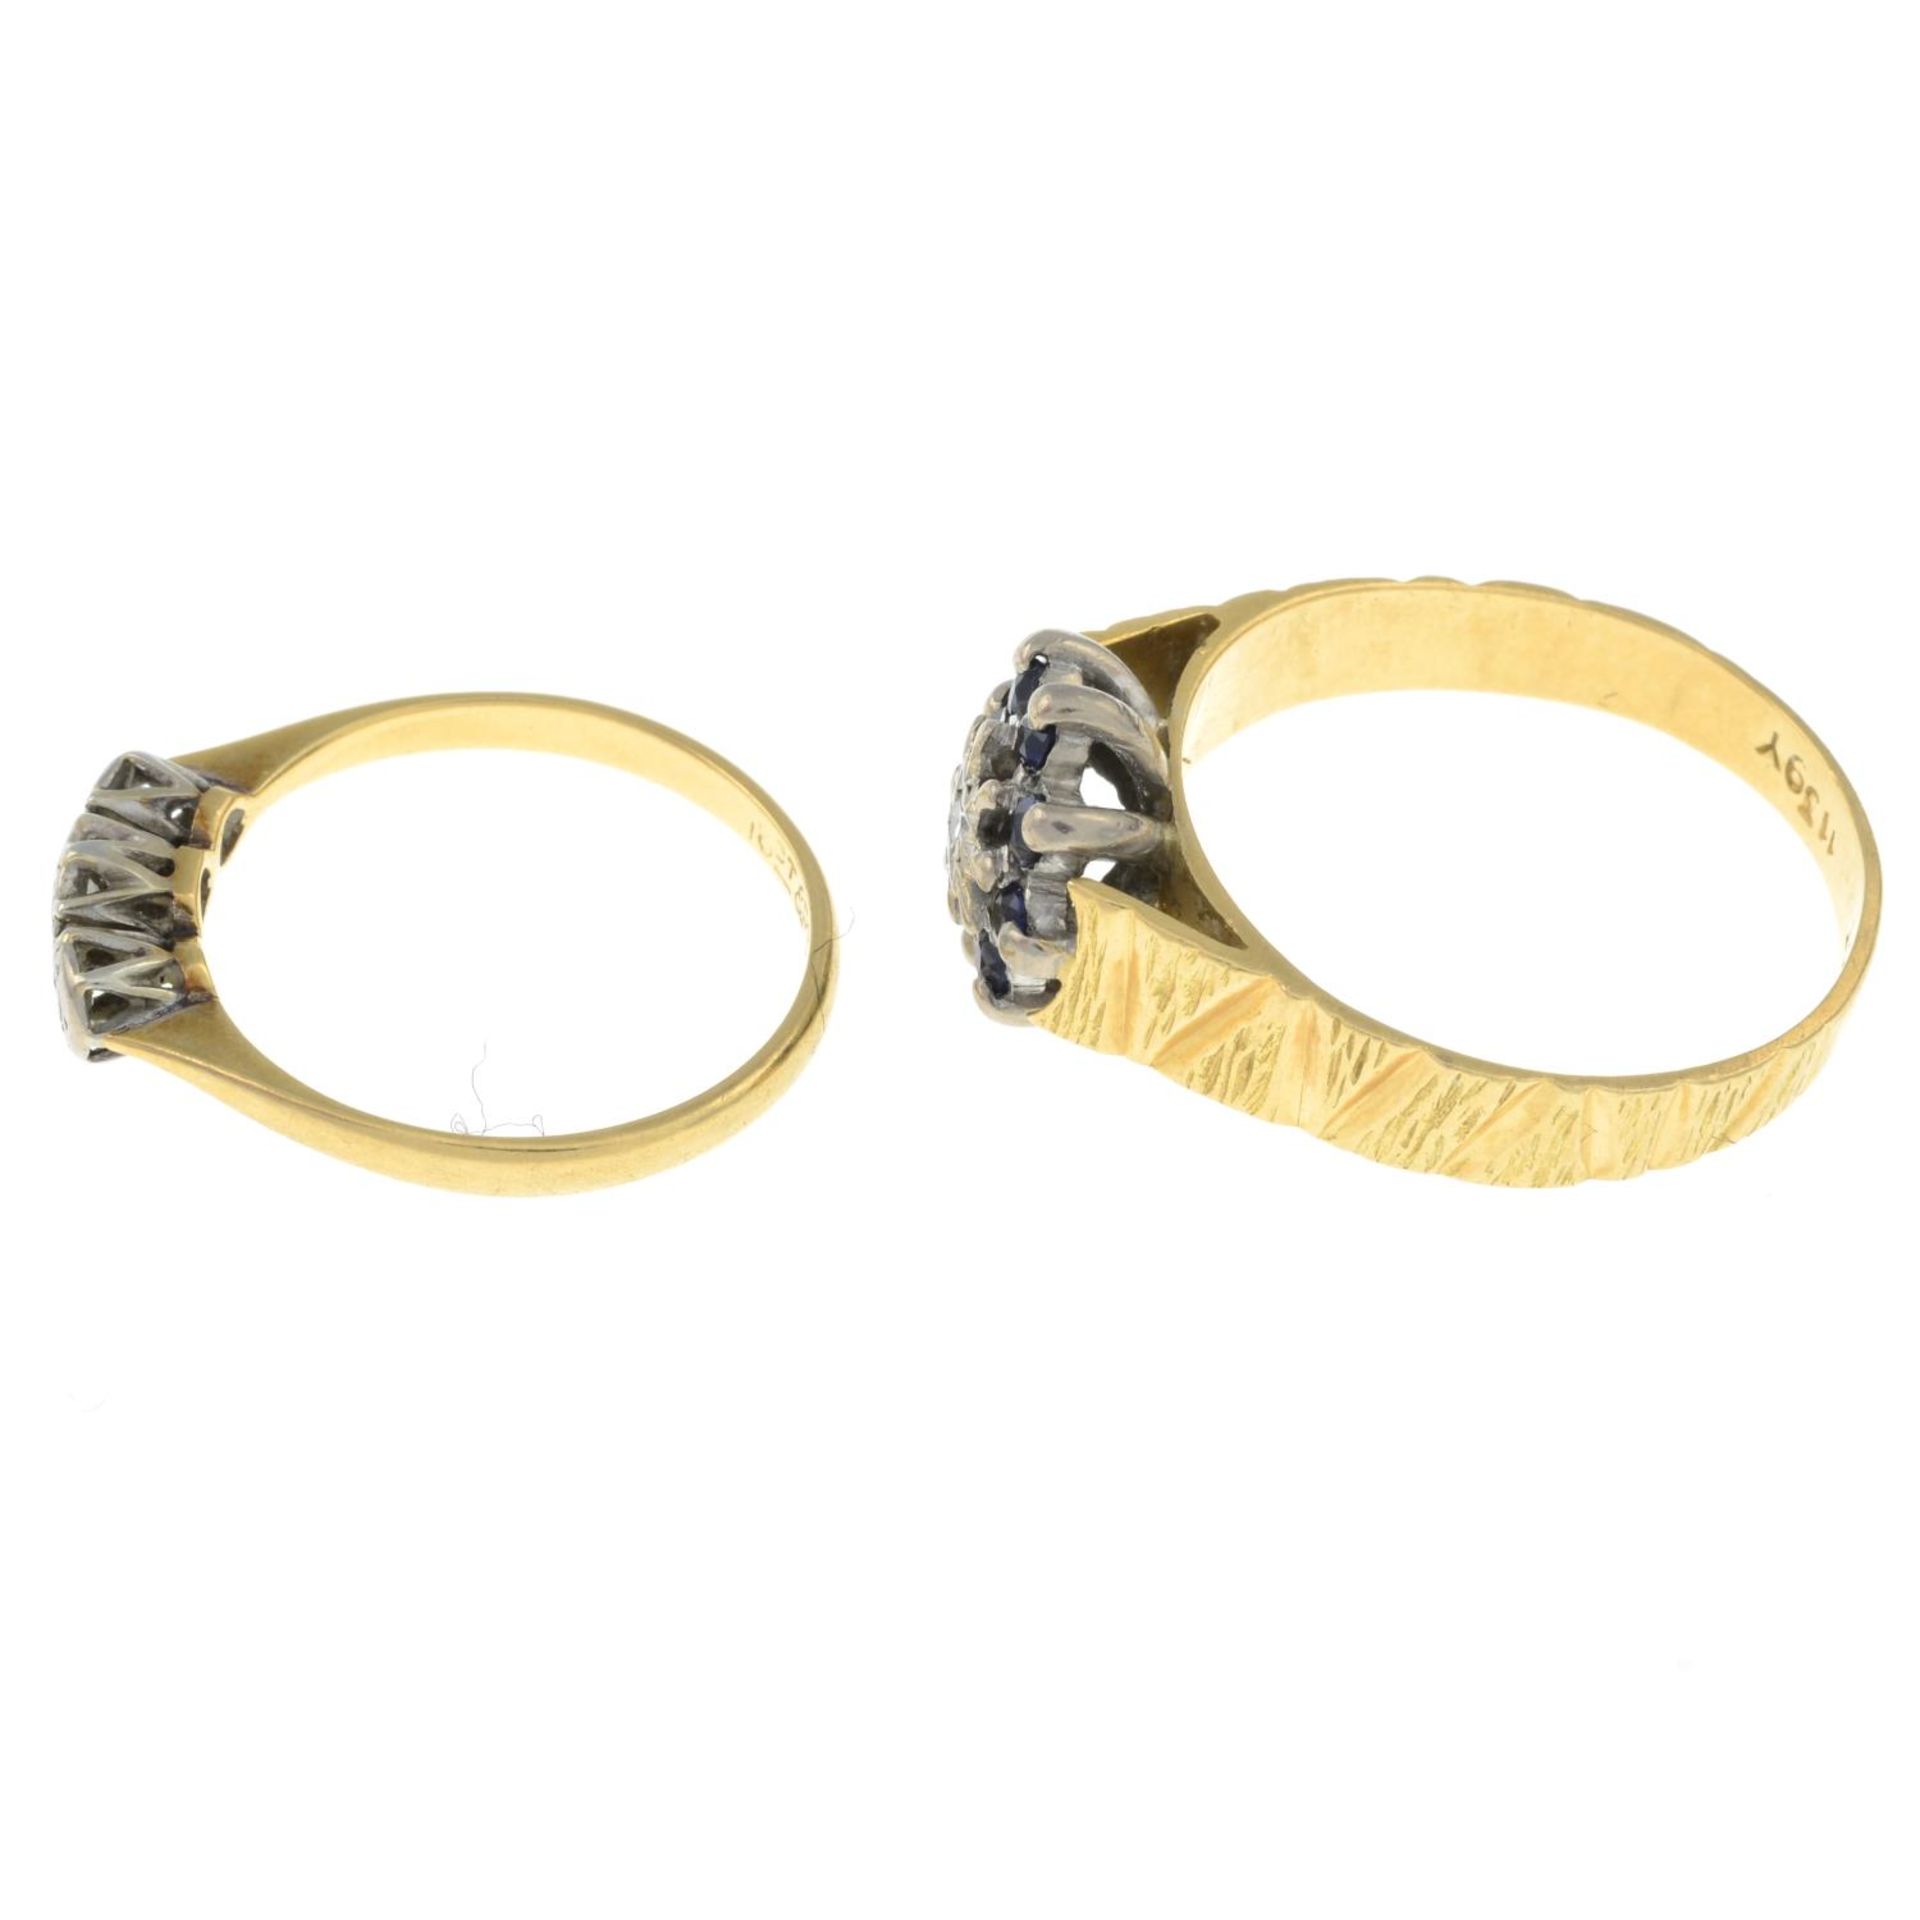 Illusion-set single-cut diamond three-stone ring, stamped 18ct&Plat, ring size K, 1.7gms. - Image 2 of 3